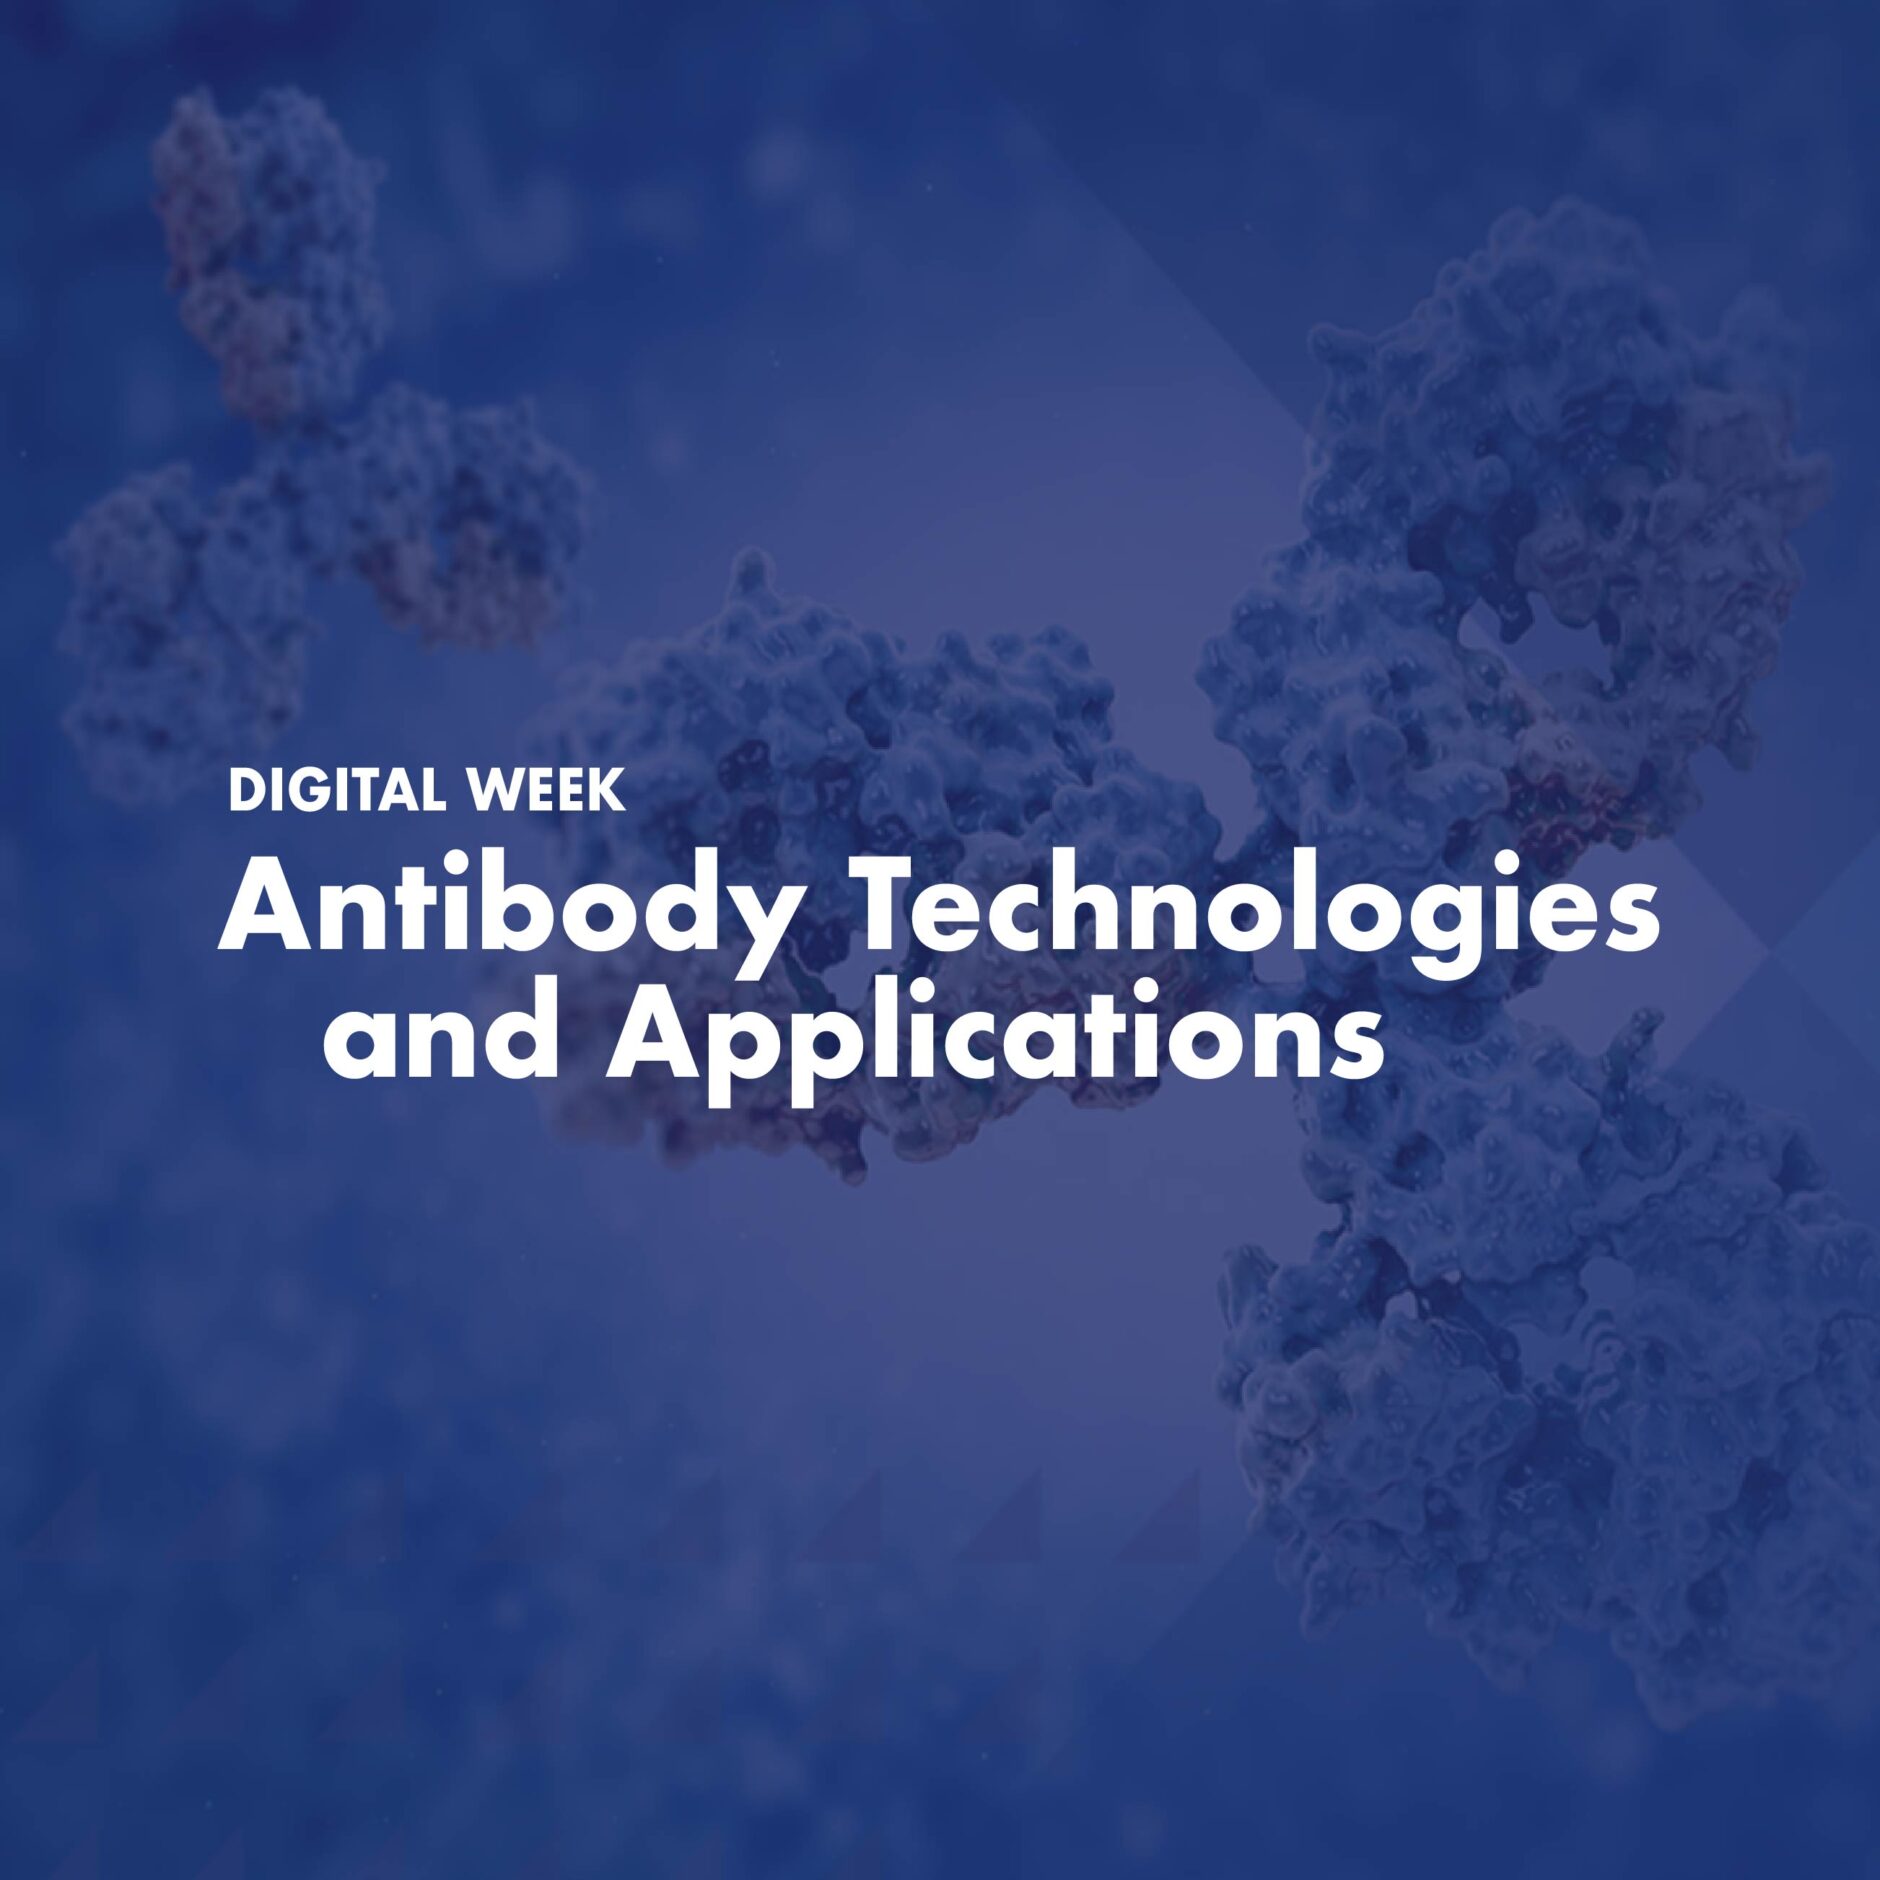 Digital week: Antibody Technologies and Applications.